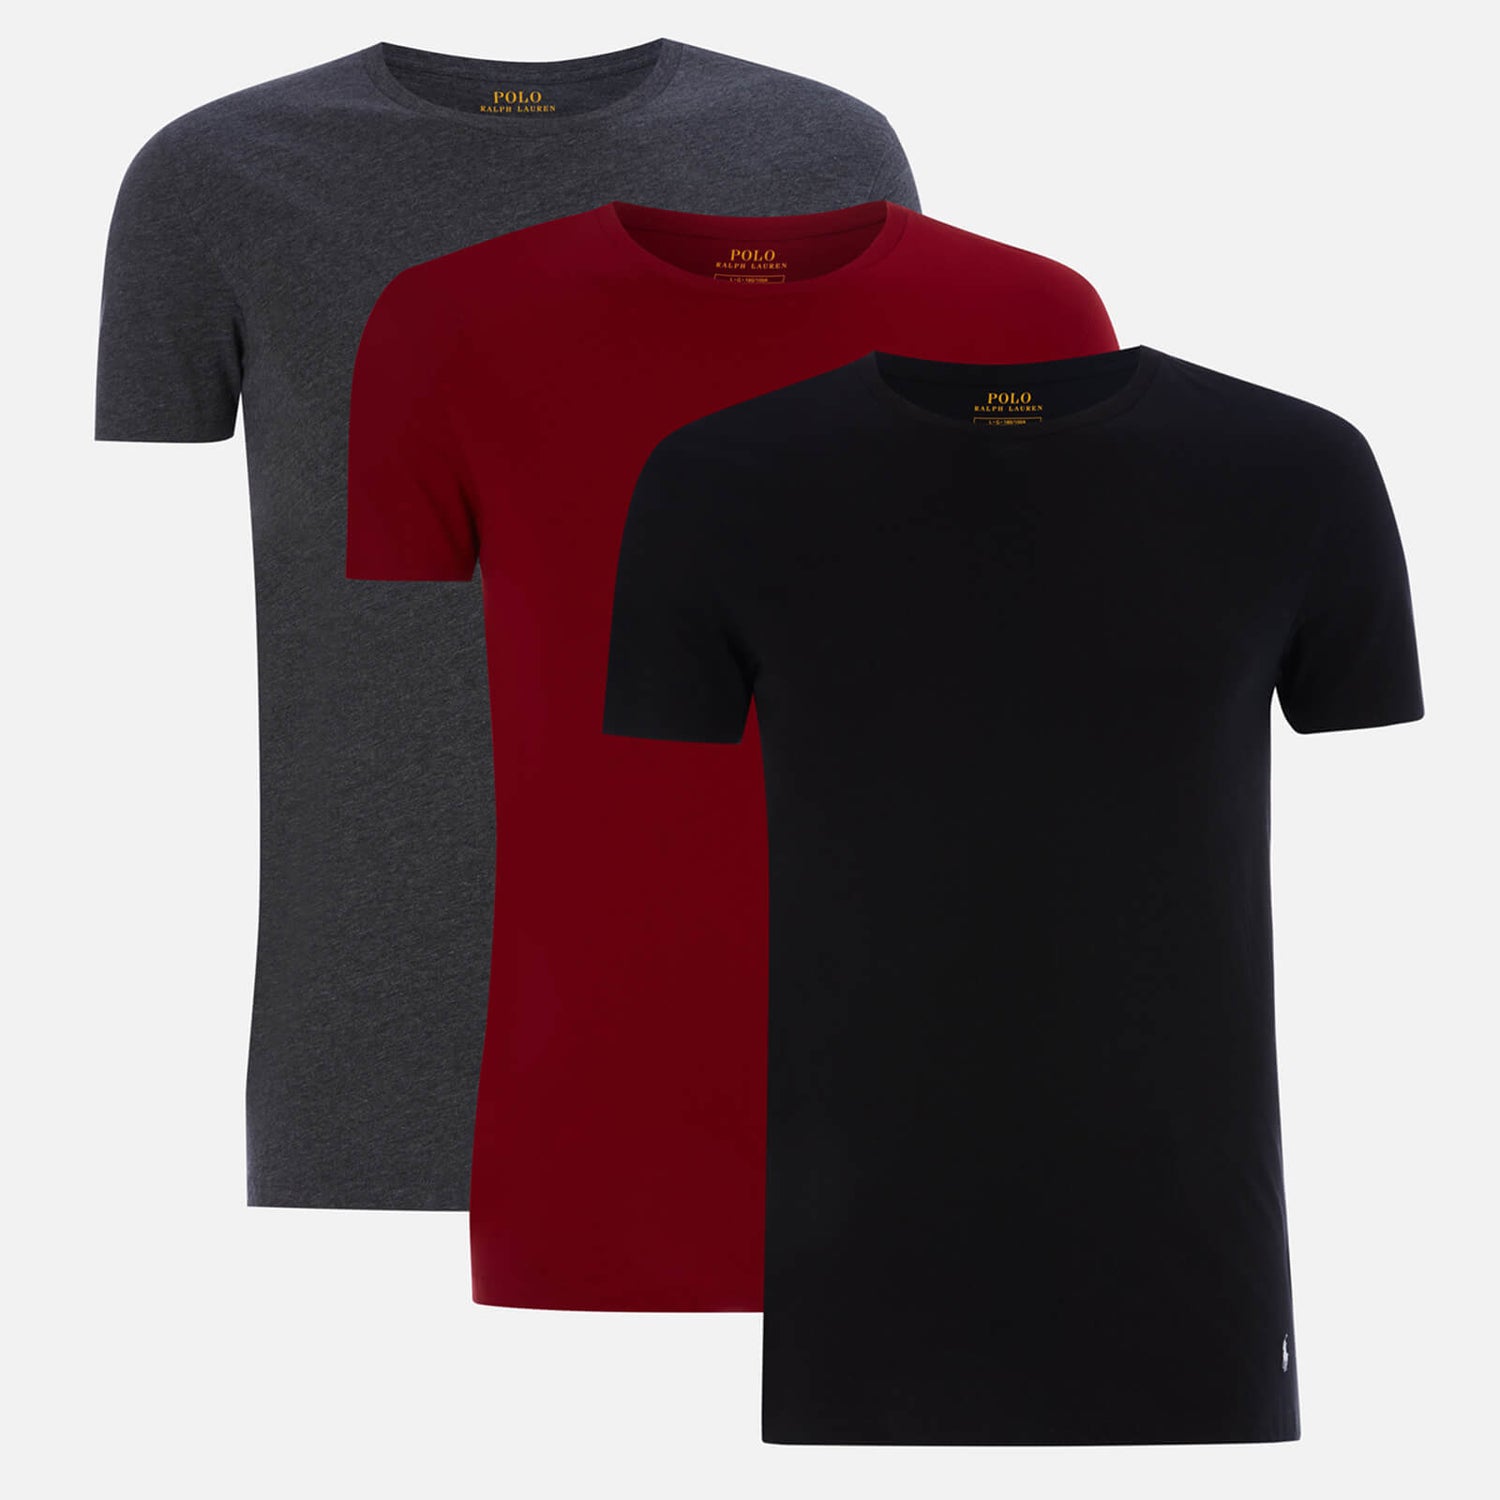 Polo Ralph Lauren Men's 3-Pack Crewneck T-Shirts - Black/Charcoal/Red